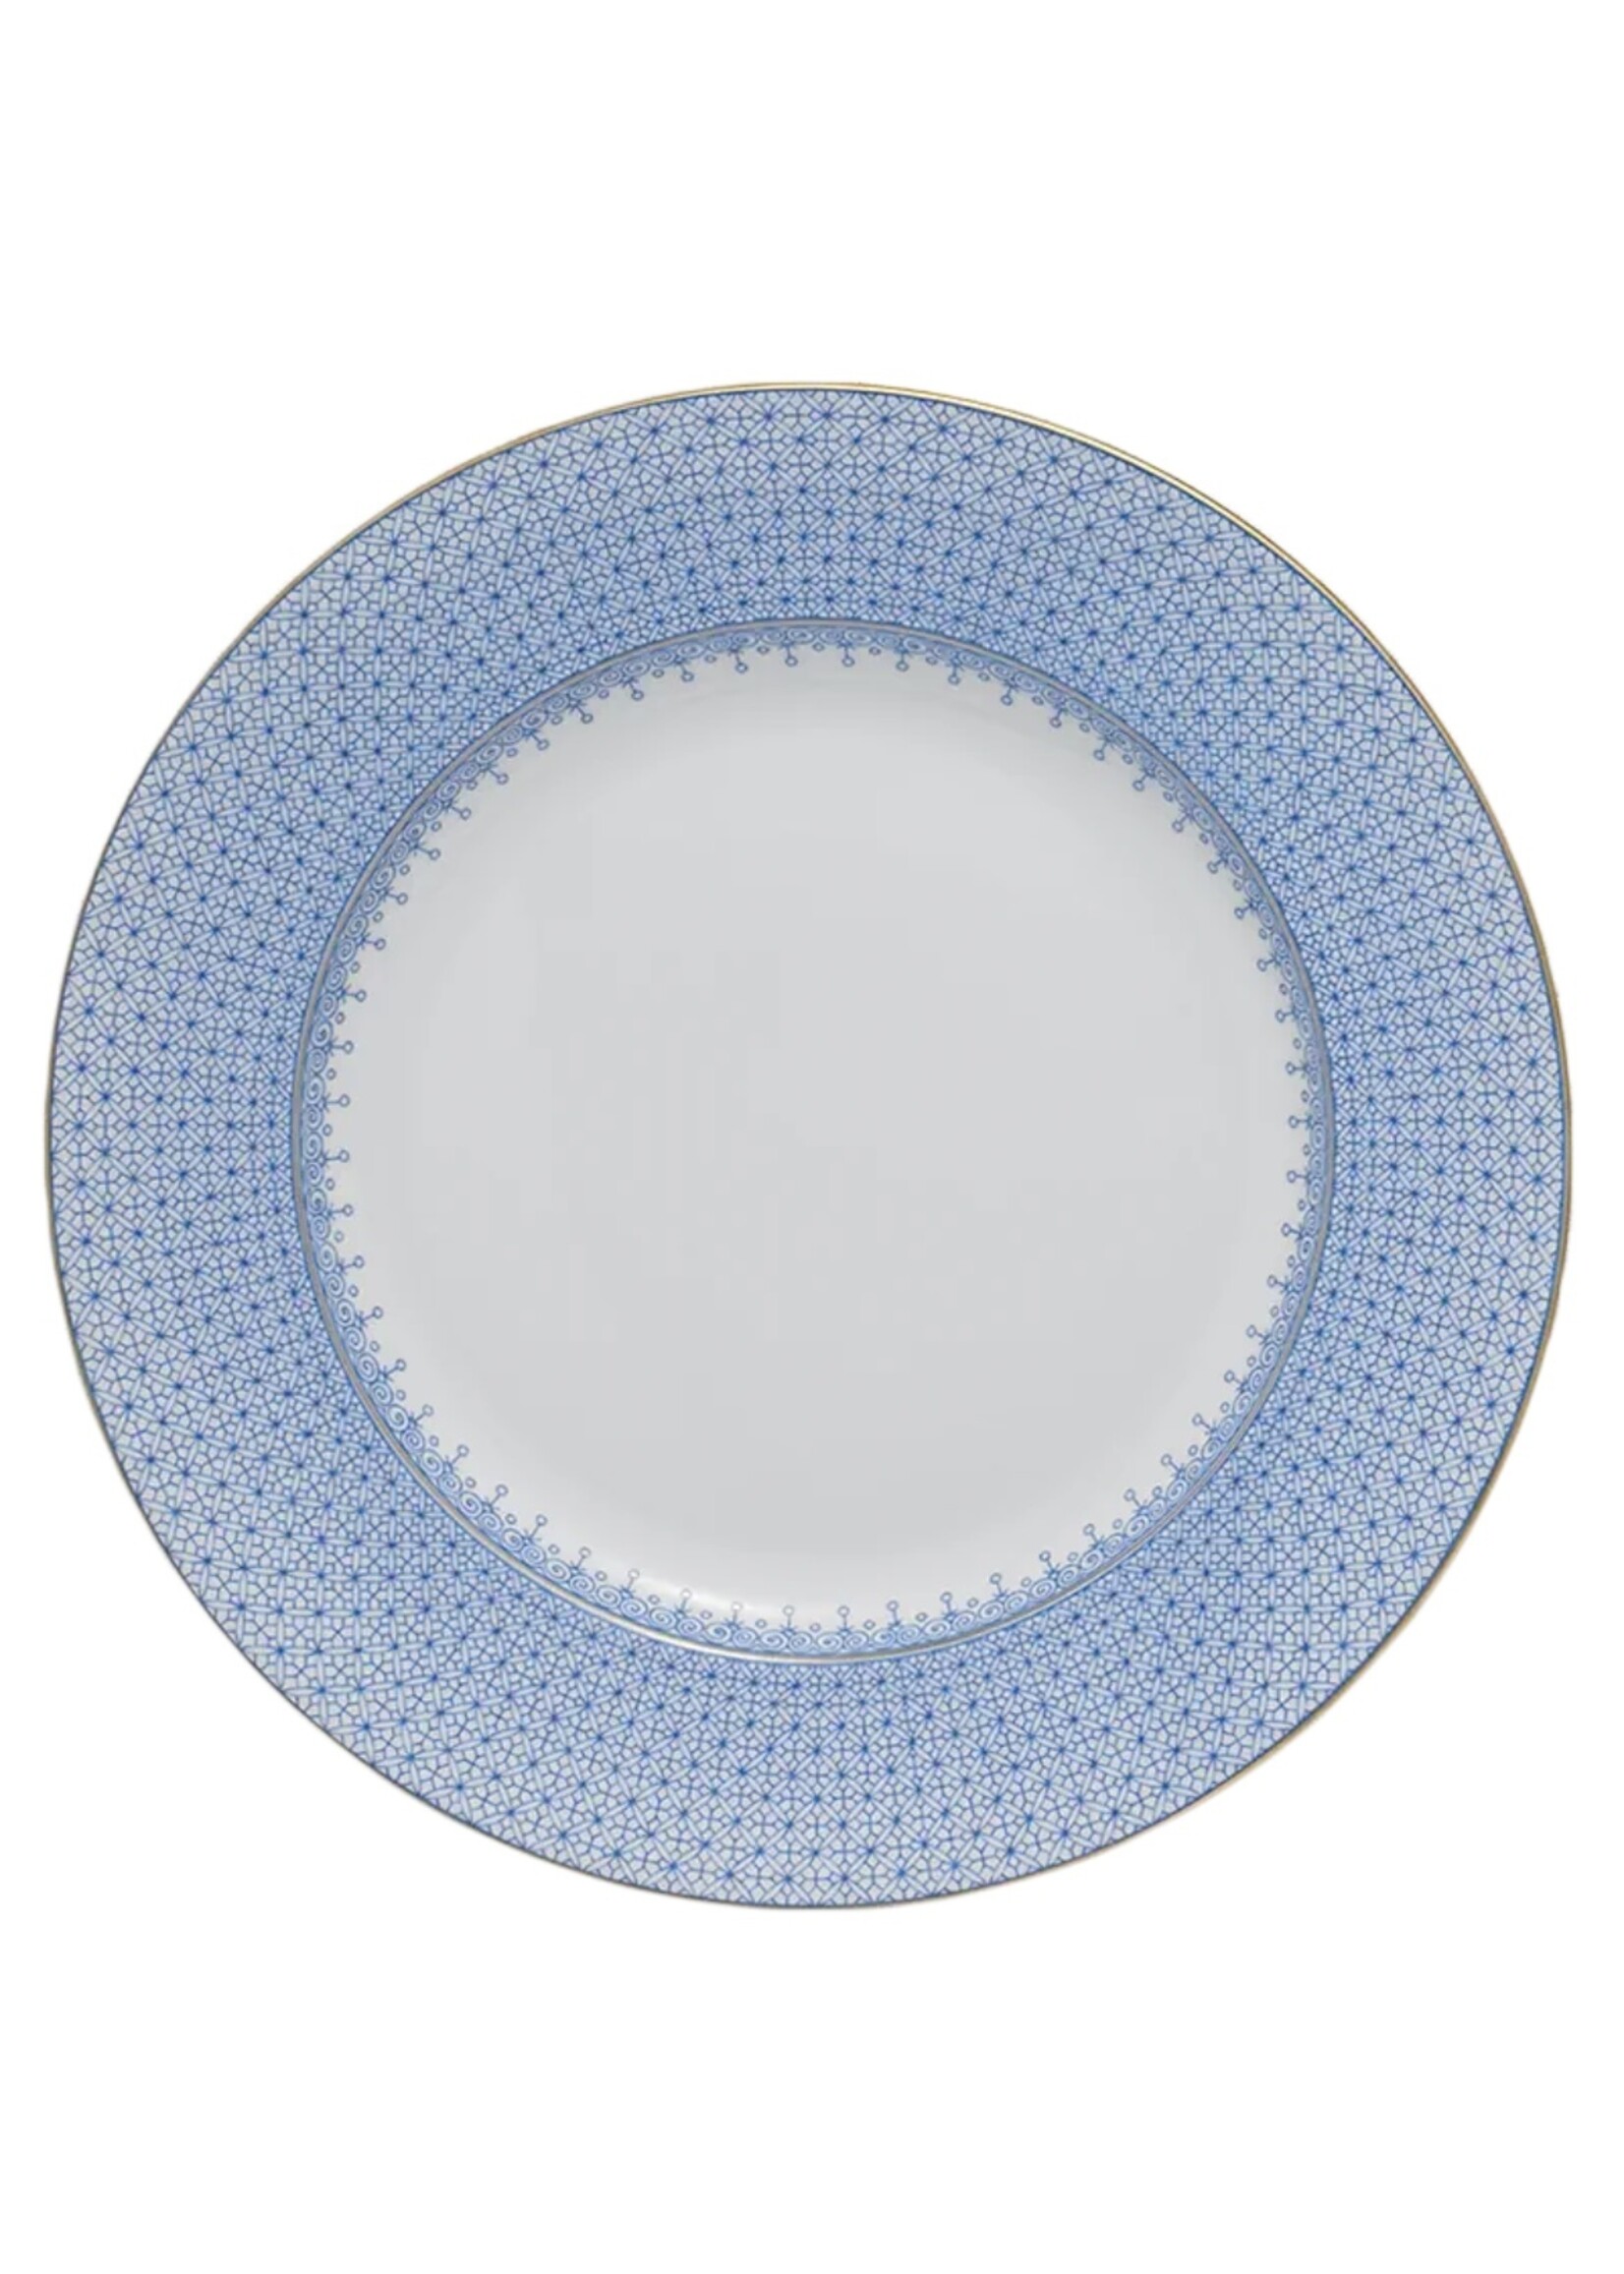 Mottahedeh Mottahedeh Cornflower Blue Dinner Plate